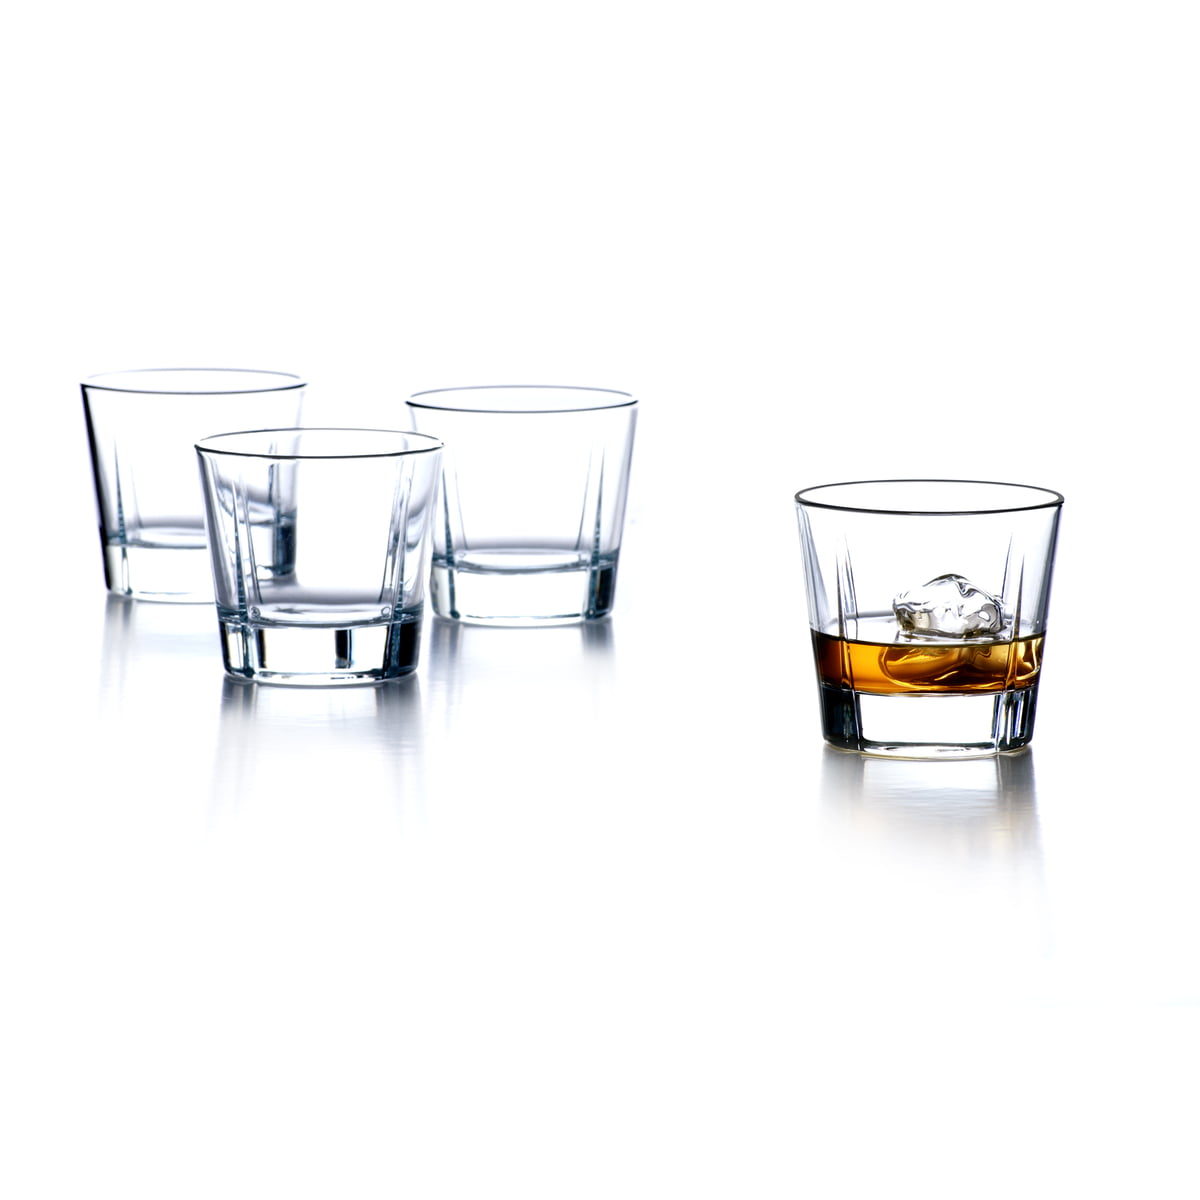 Konijn Laster kijk in Grand Cru whisky glass | Rosendahl | Shop